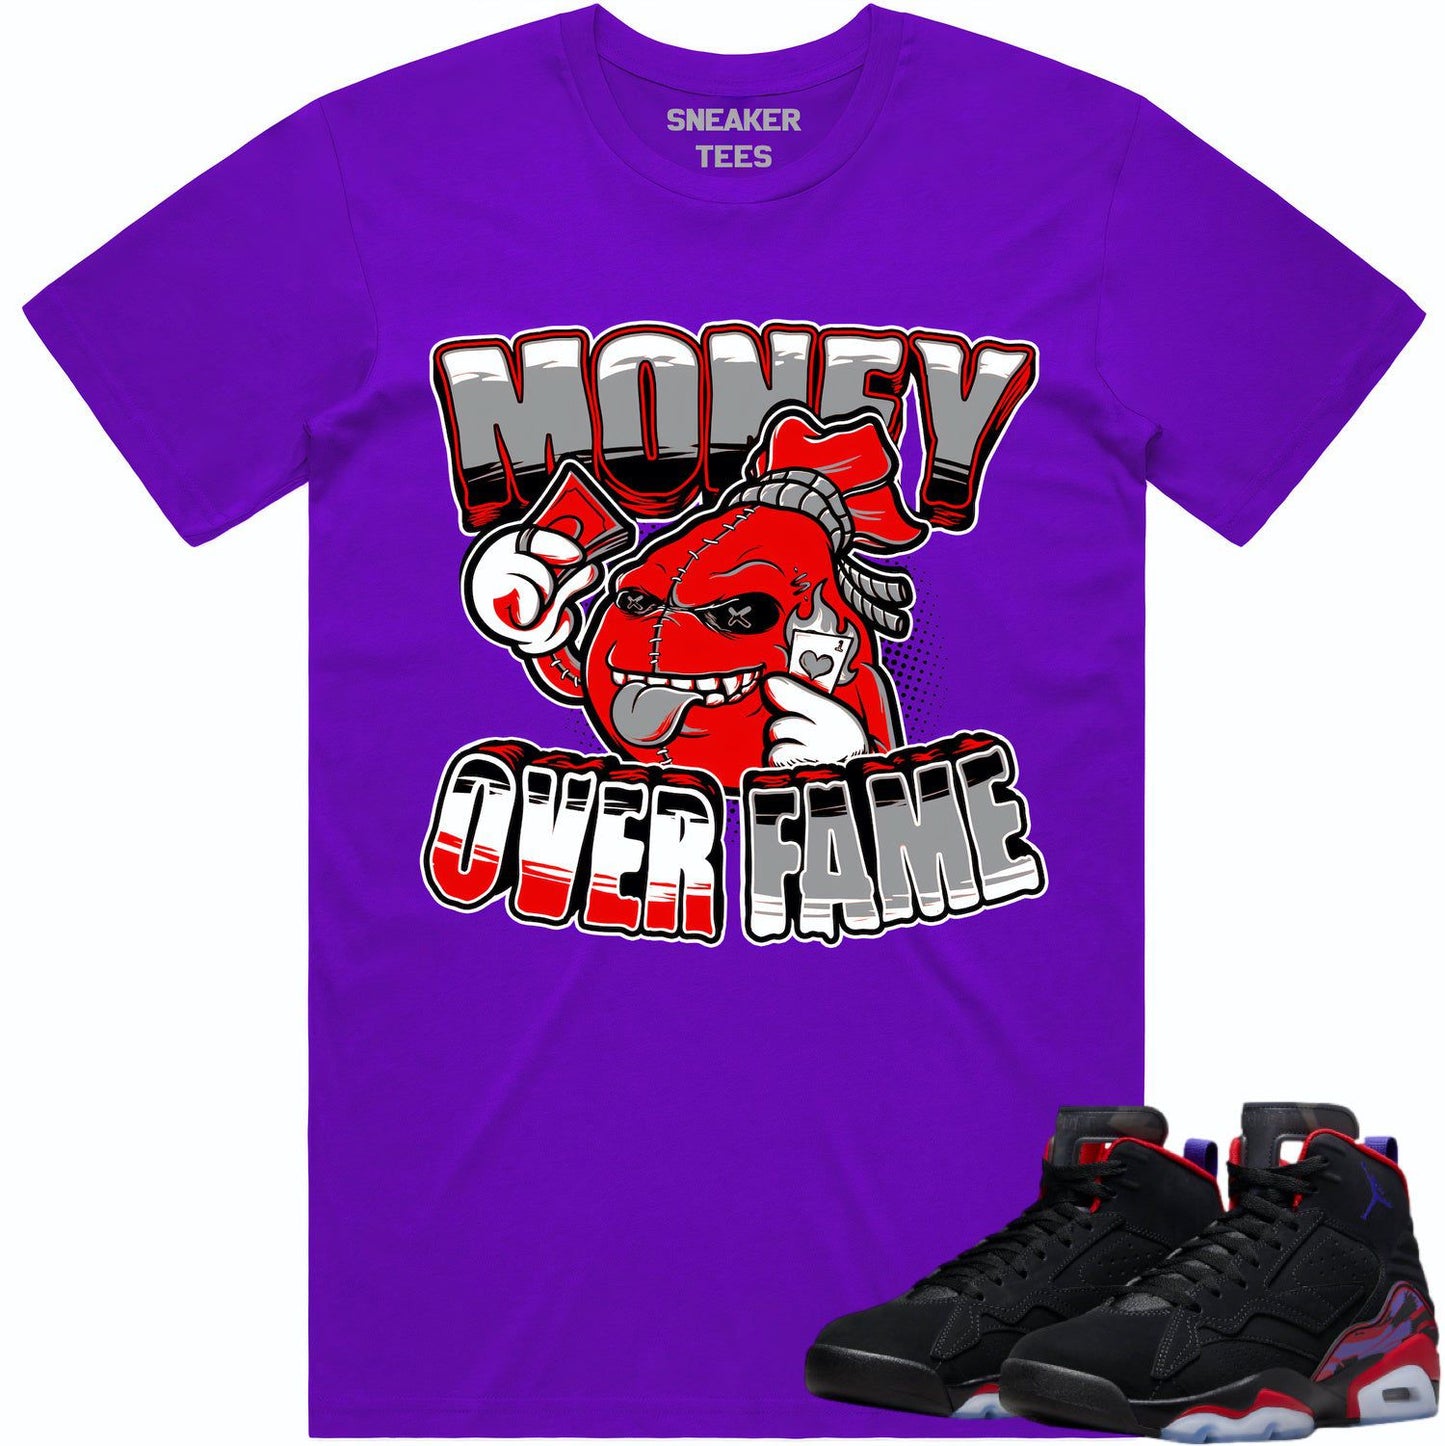 Jordan MVP Raptors Shirt - Sneaker Tees - Red Money over Fame